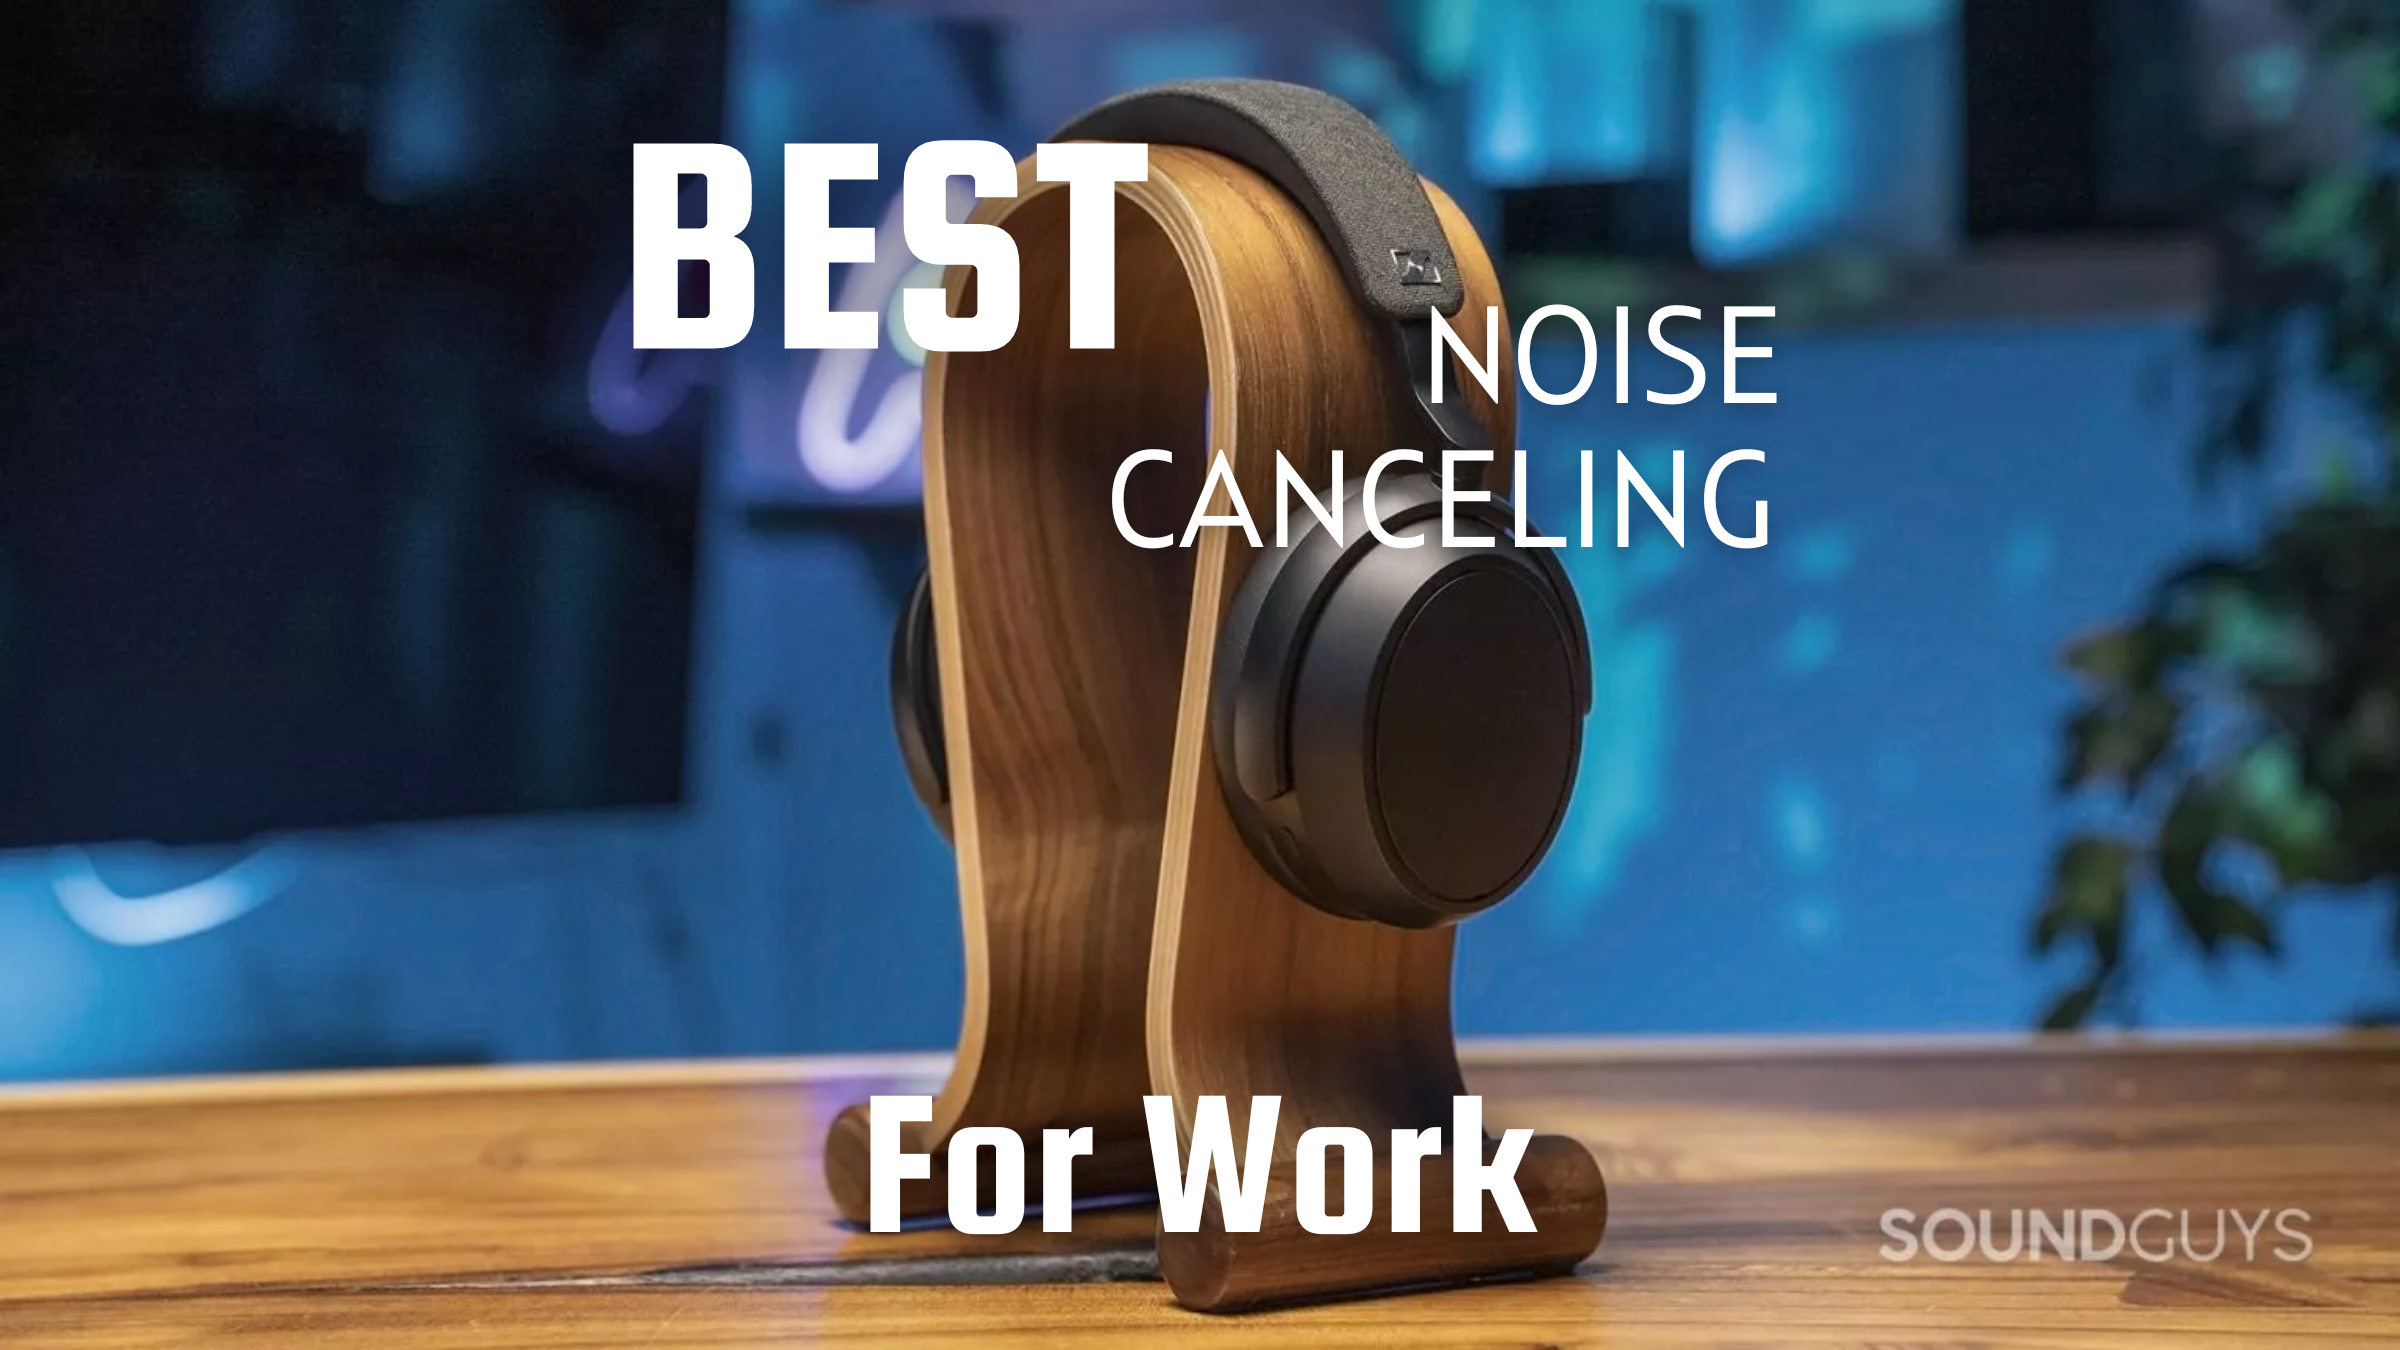 Best noise canceling headphones for workBest noise canceling headphones for work